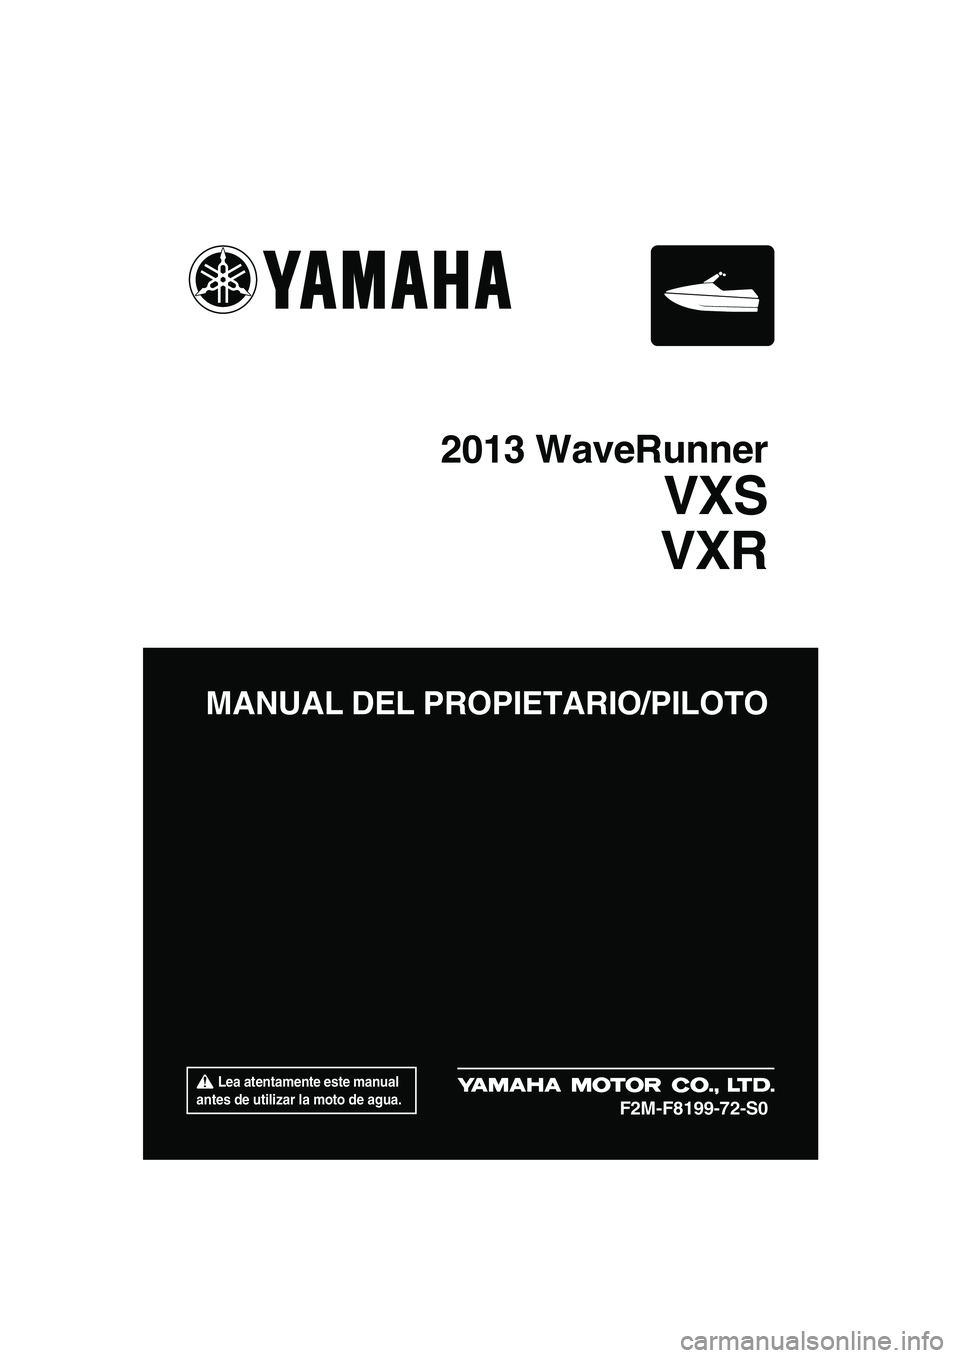 YAMAHA VXR 2013  Manuale de Empleo (in Spanish)  Lea atentamente este manual 
antes de utilizar la moto de agua.
MANUAL DEL PROPIETARIO/PILOTO
2013 WaveRunner
VXS
VXR
F2M-F8199-72-S0
UF2M72S0.book  Page 1  Thursday, July 5, 2012  5:19 PM 